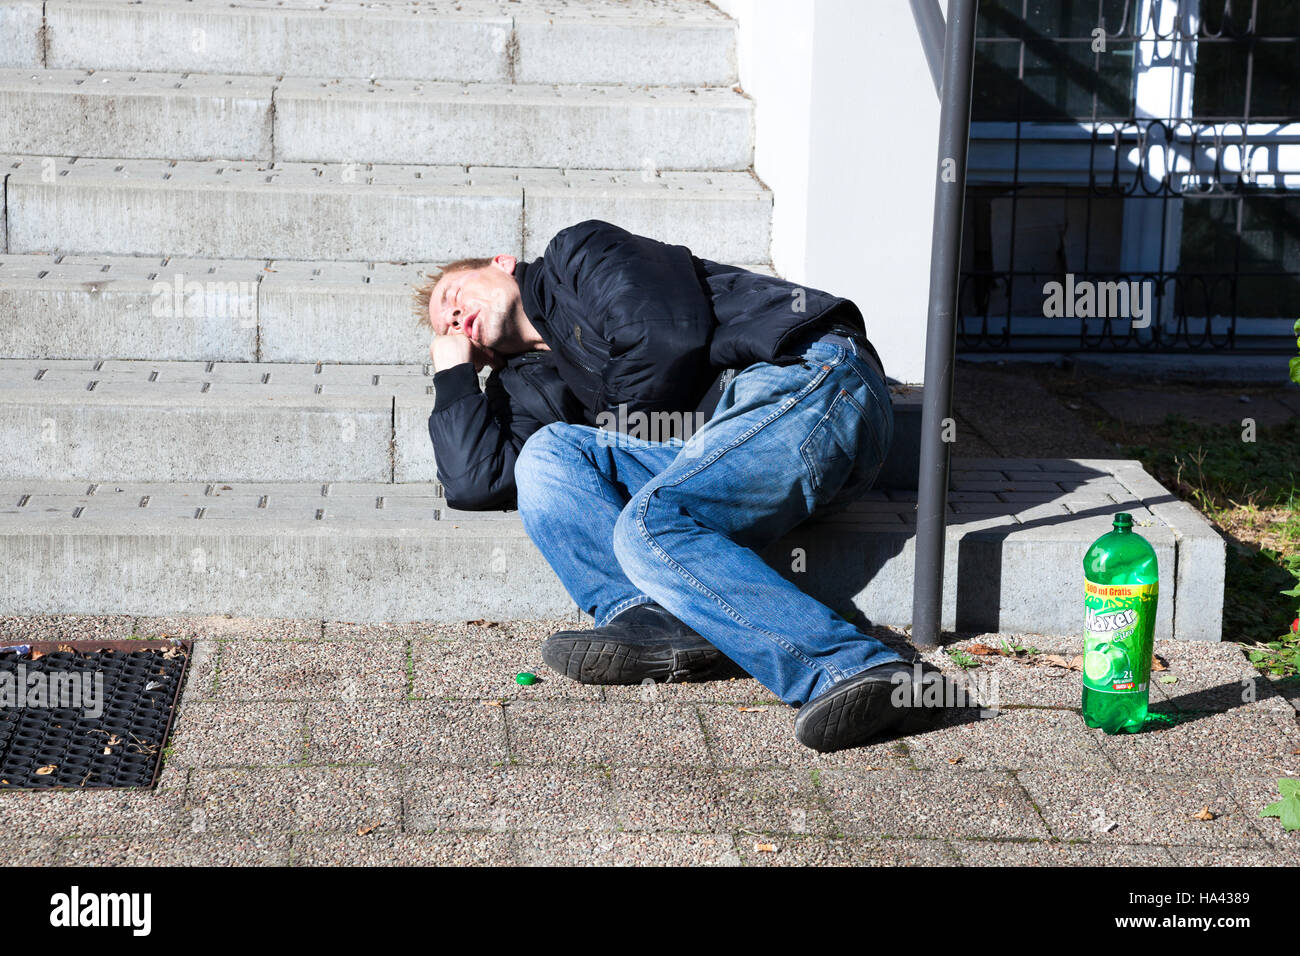 Drunkard sleeping on public stairs in the street Stock Photo